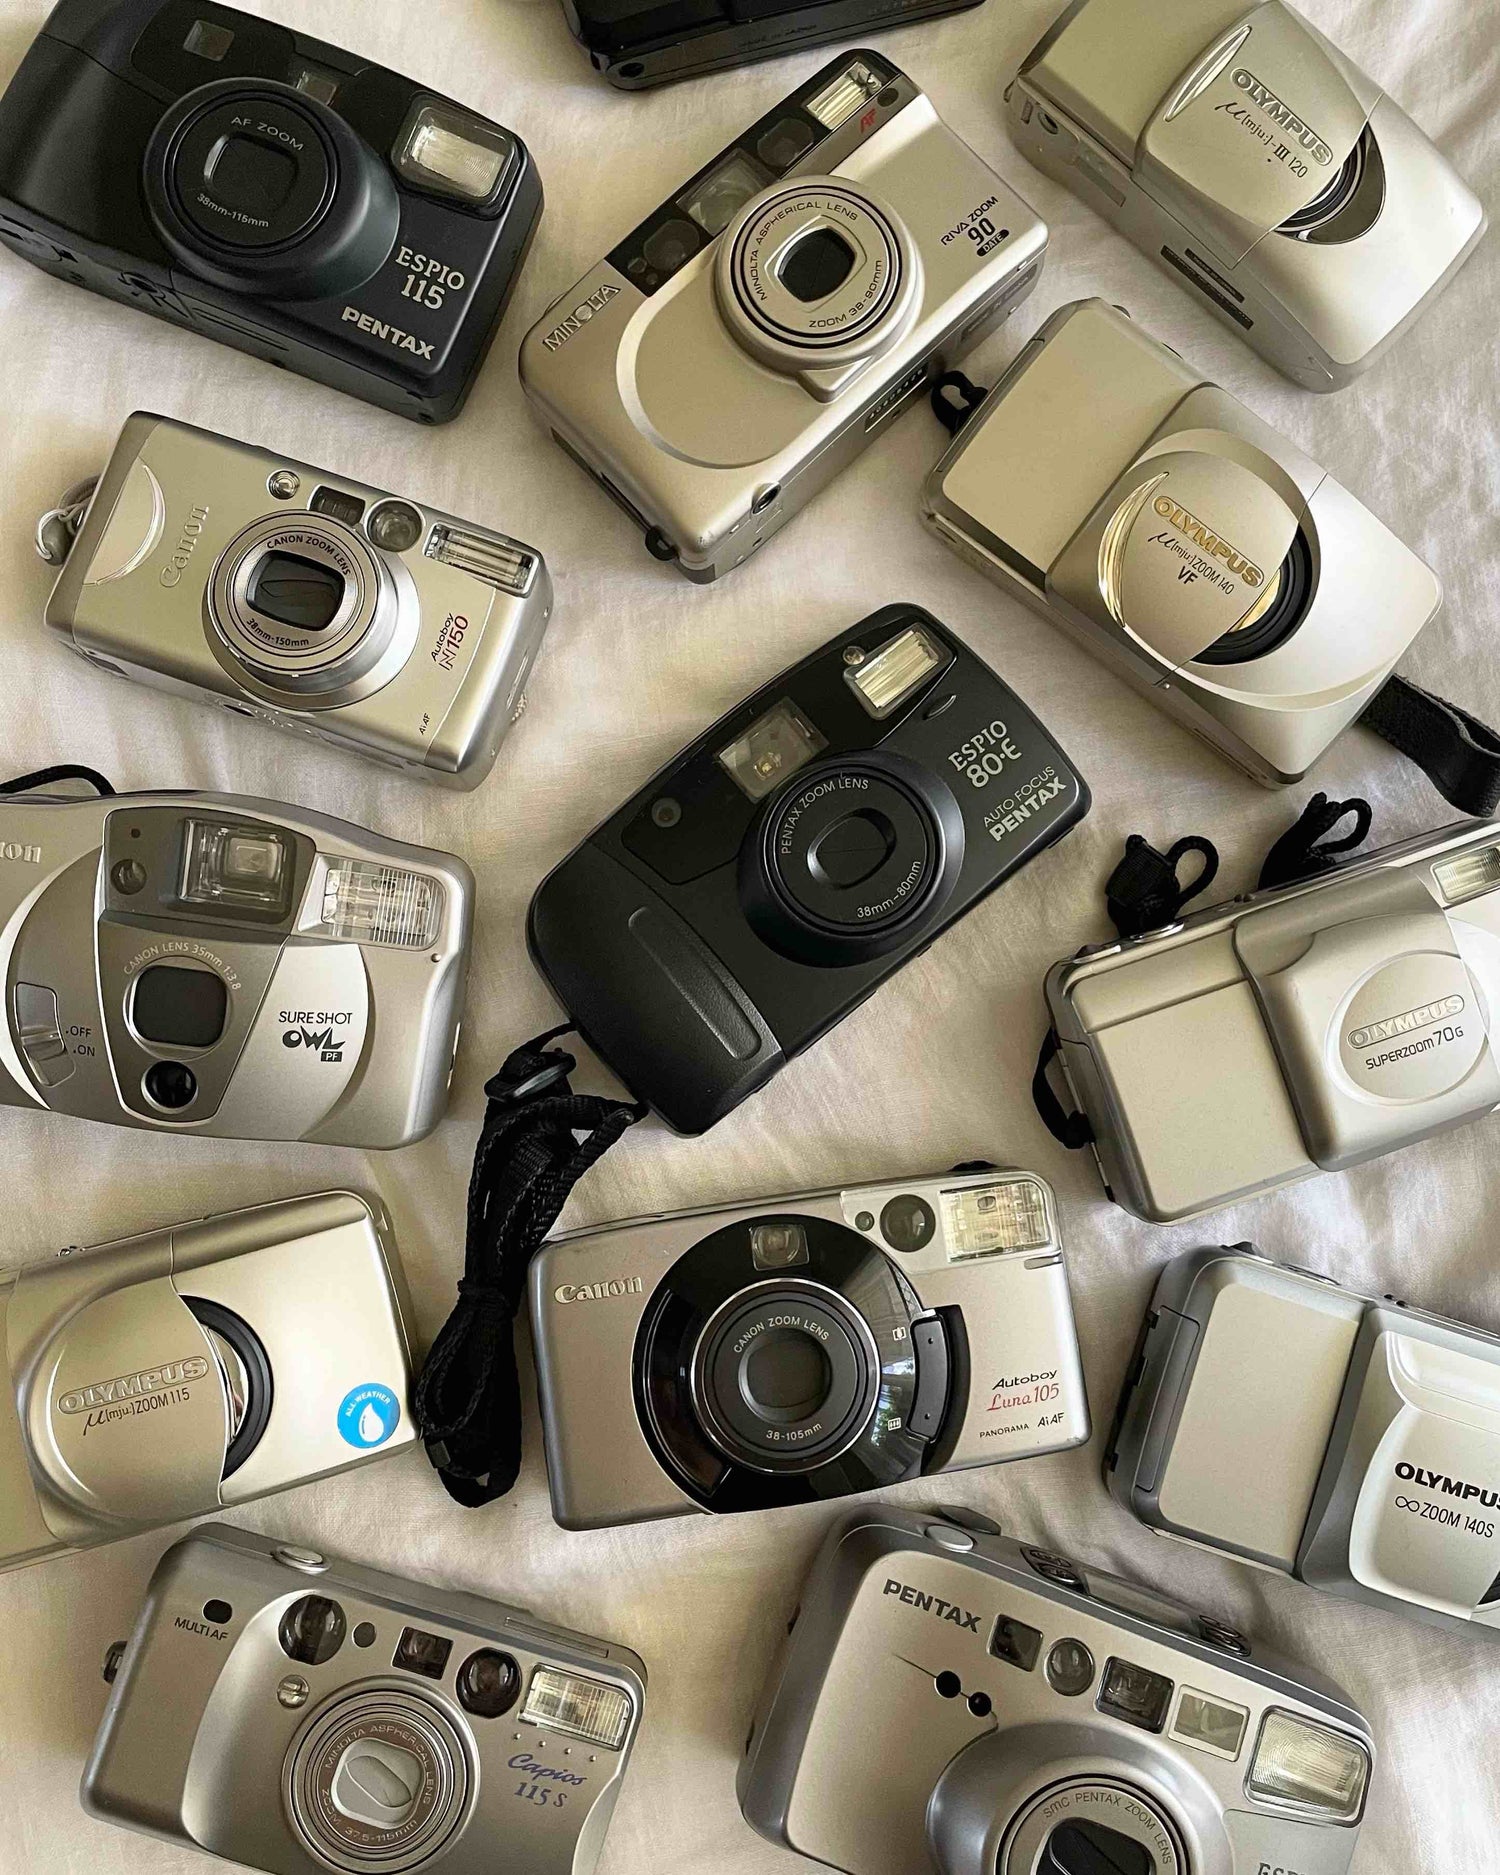 35mm Reusable Film Cameras Australia